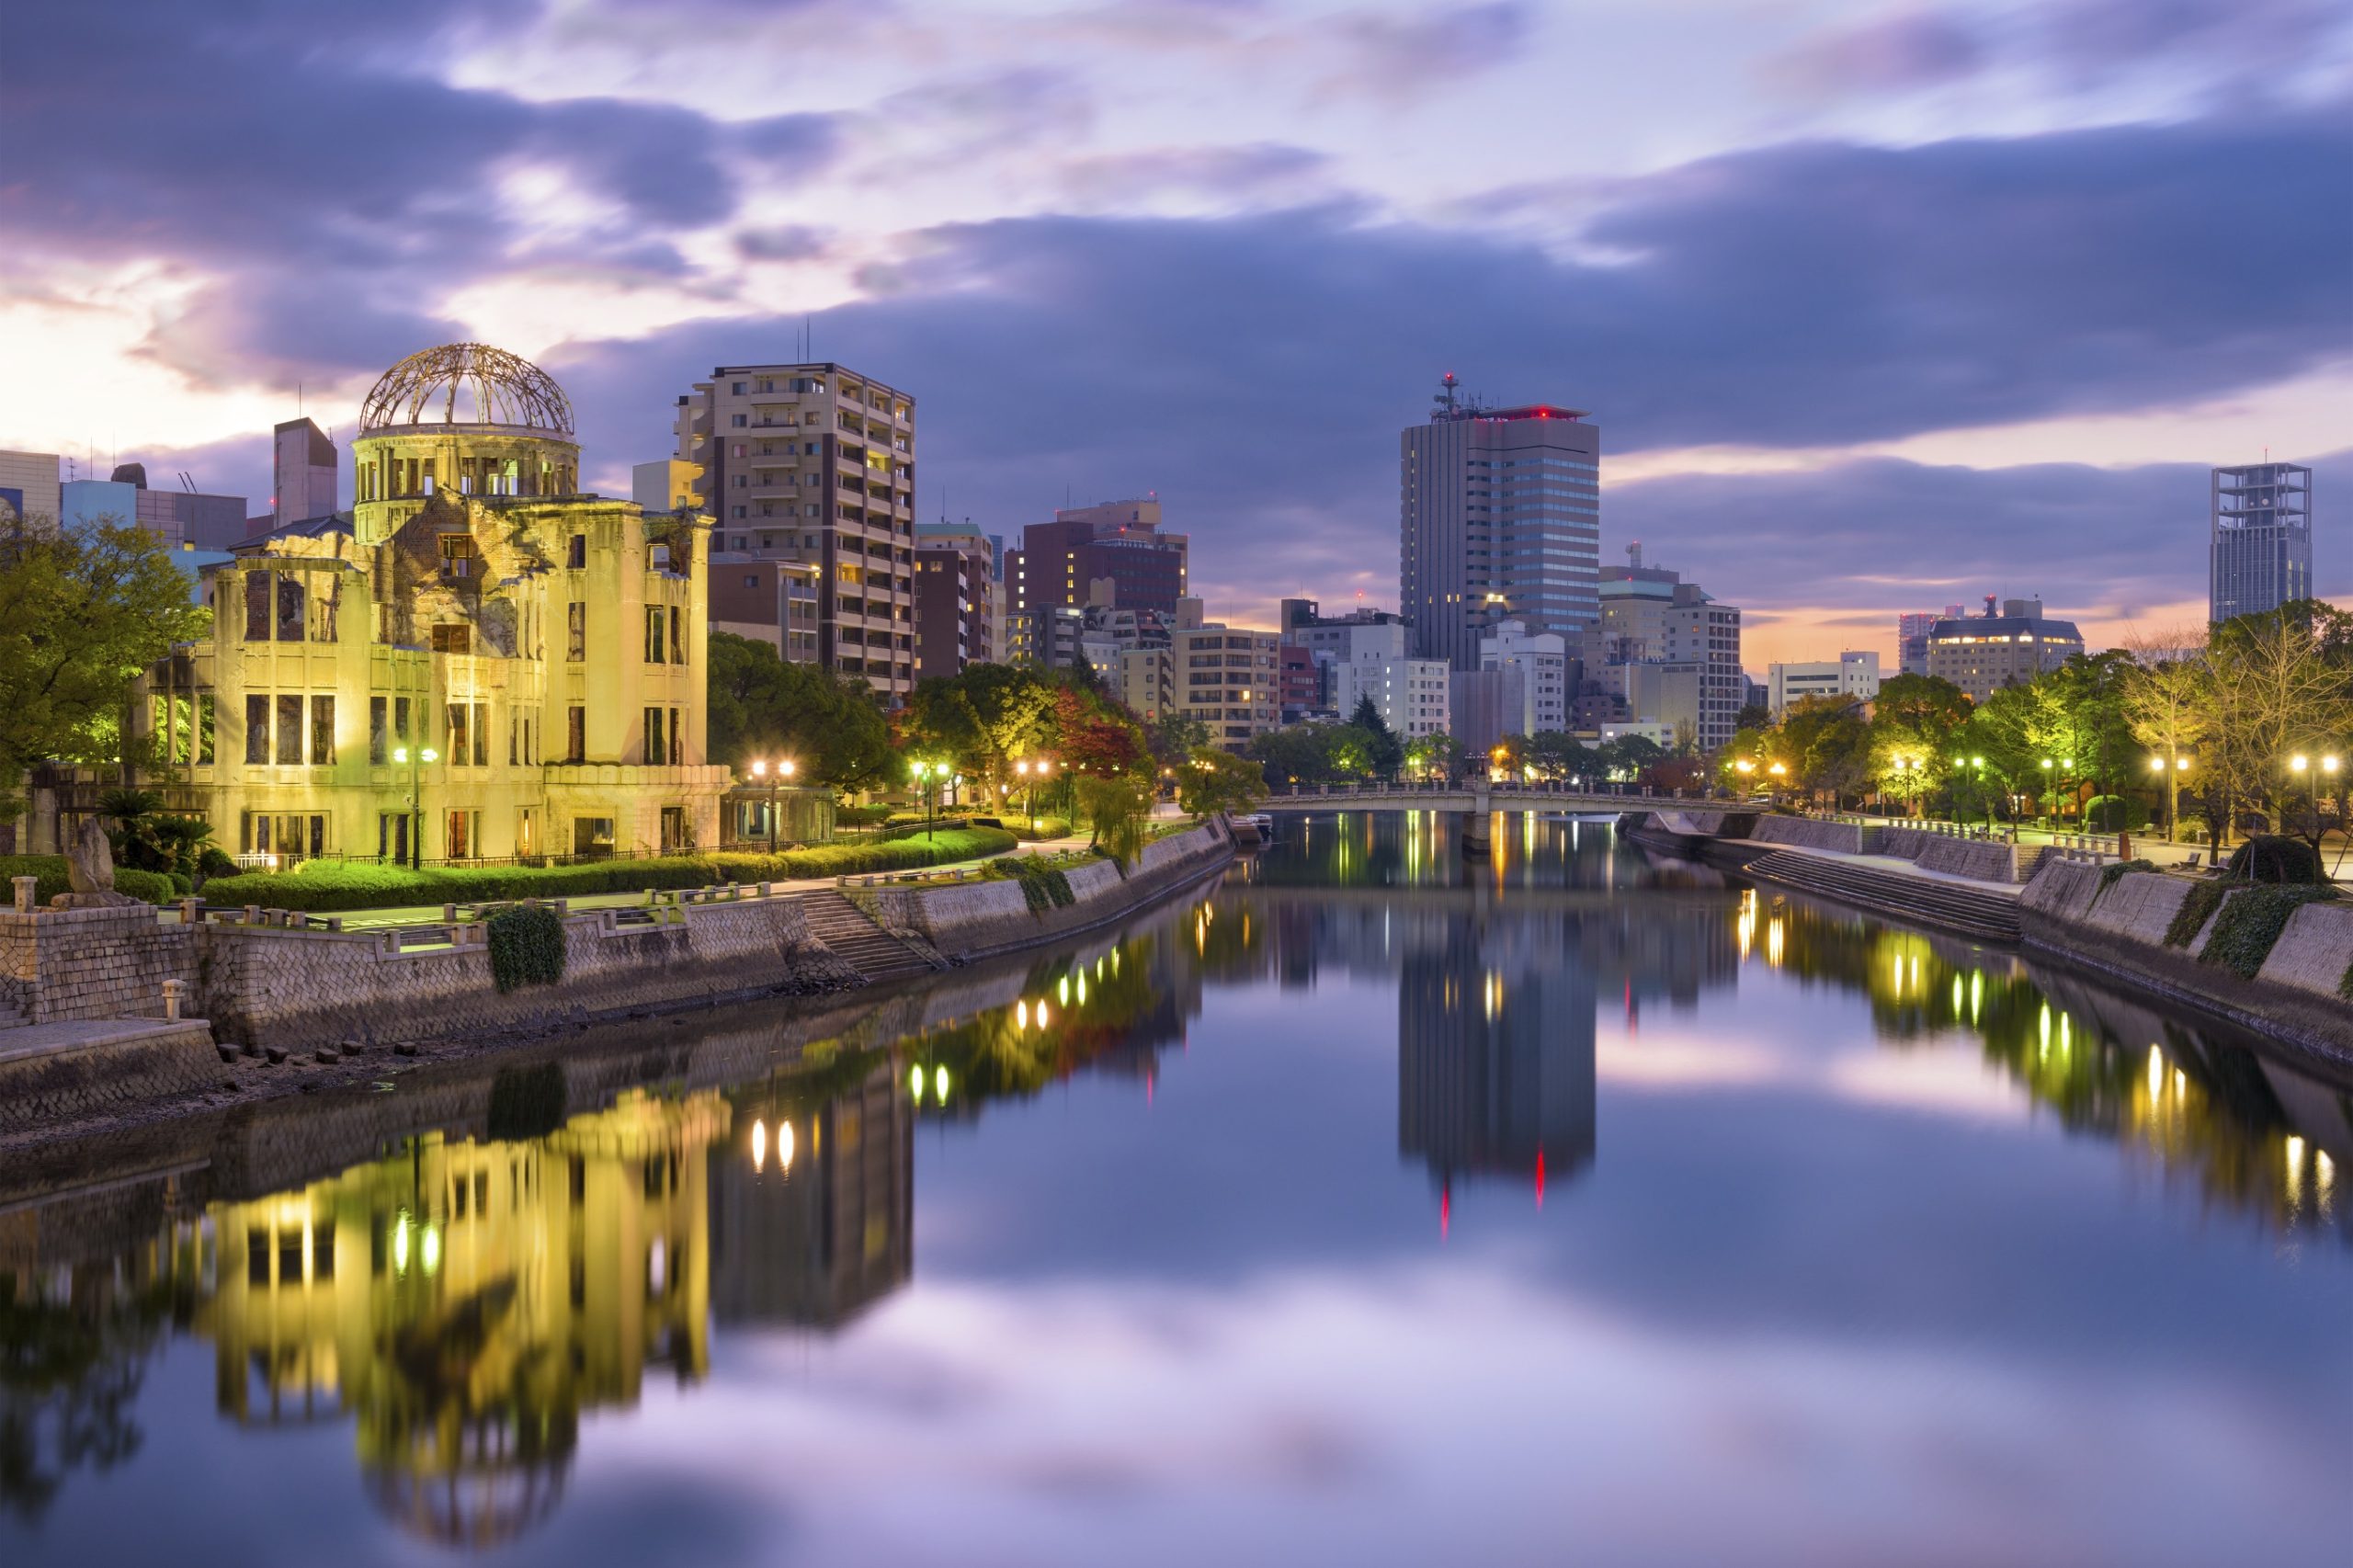 Get Hiroshima Your Ultimate Travel Guide to Hiroshima’s Hidden Gems